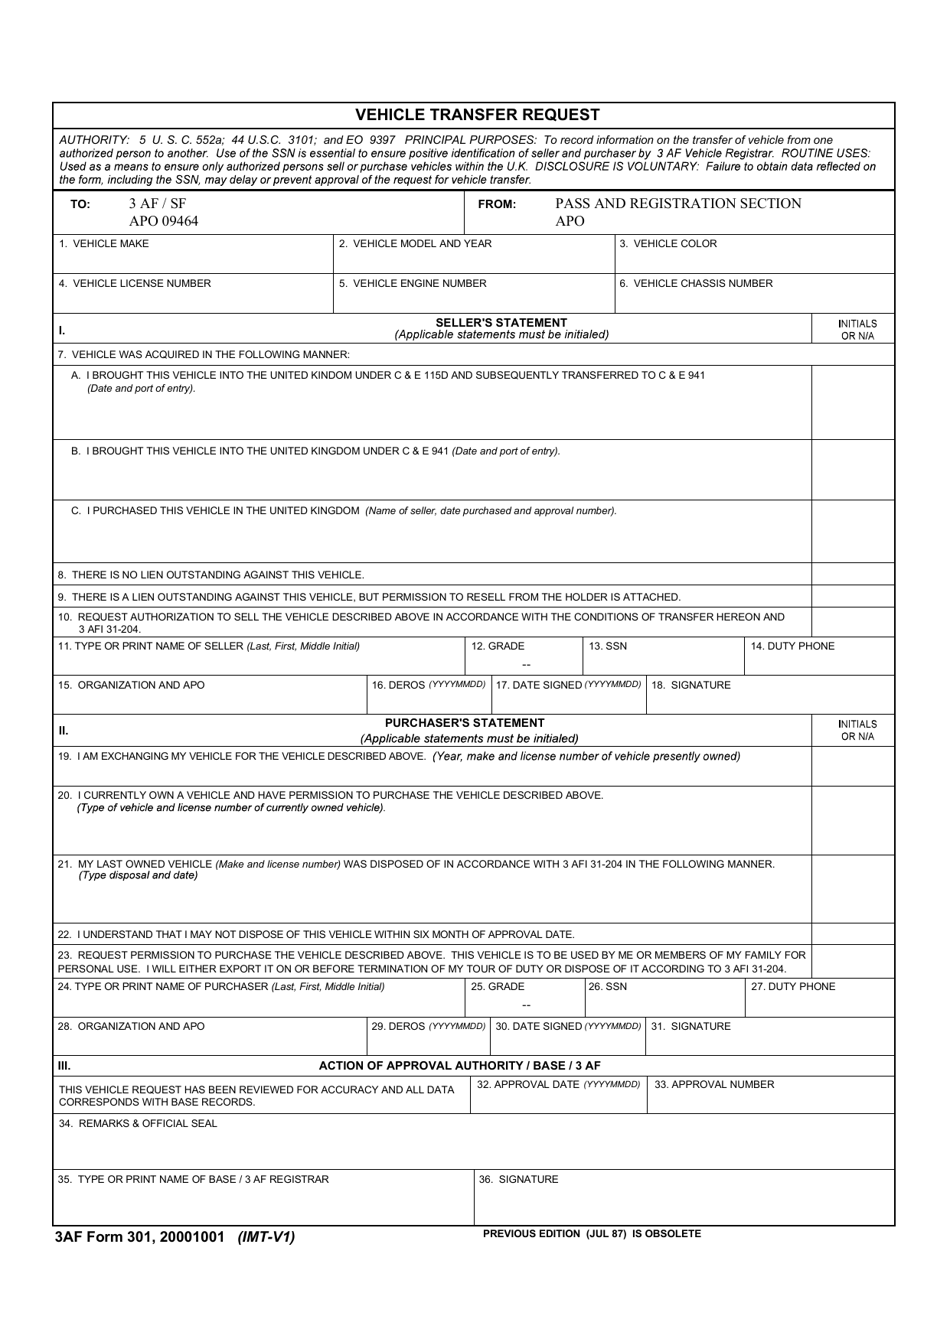 3 AF Form 301 Vehicle Transfer Request, Page 1